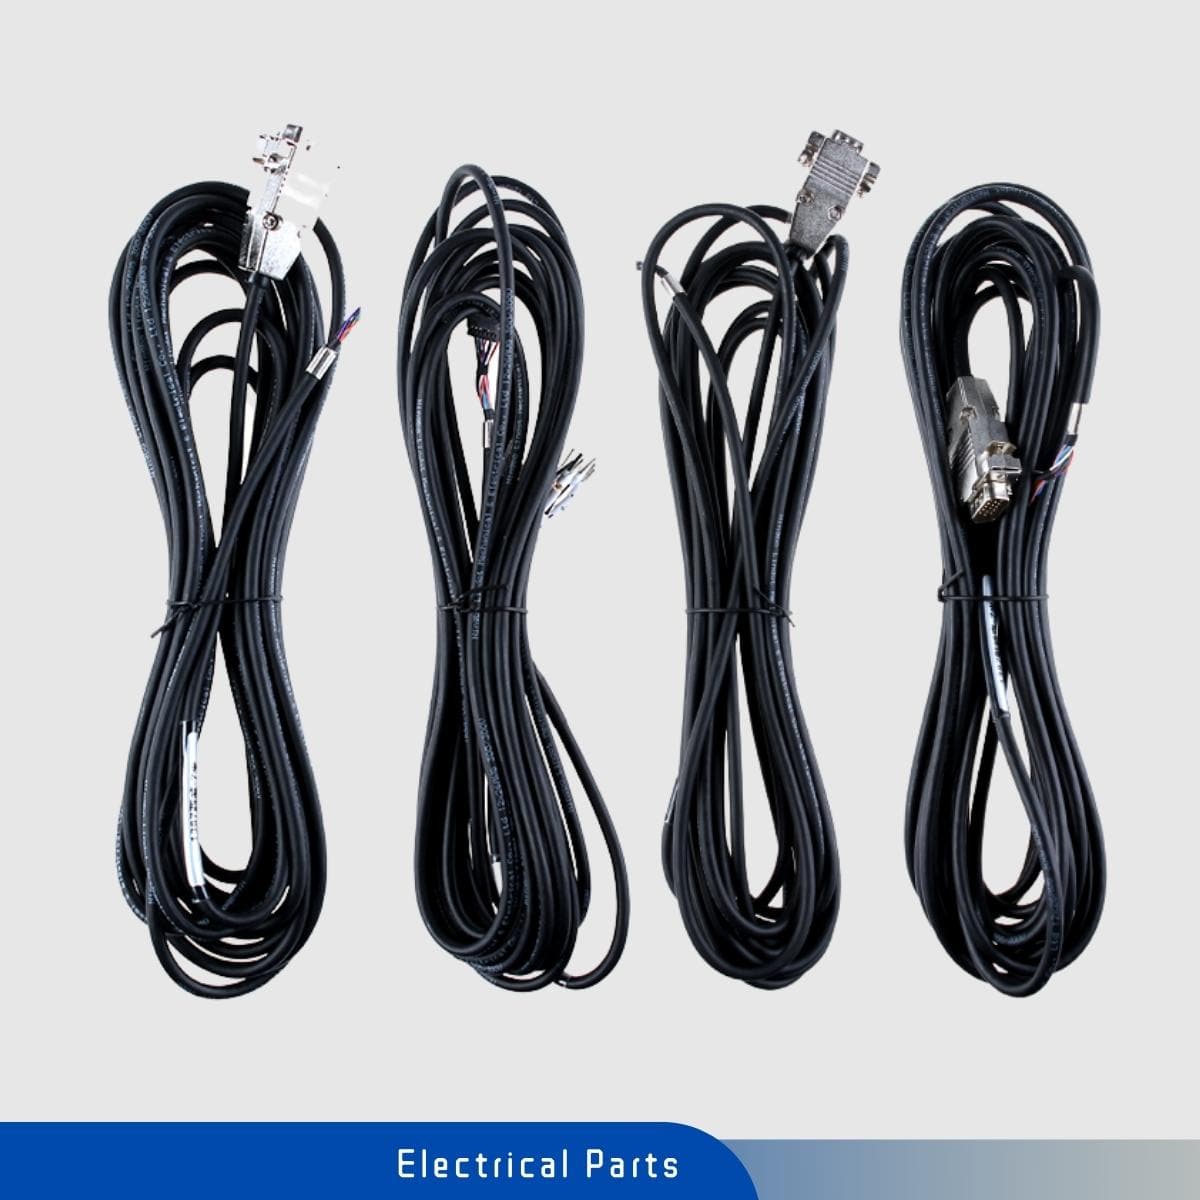 Heidenhain 1387 Encoder Connection Cable